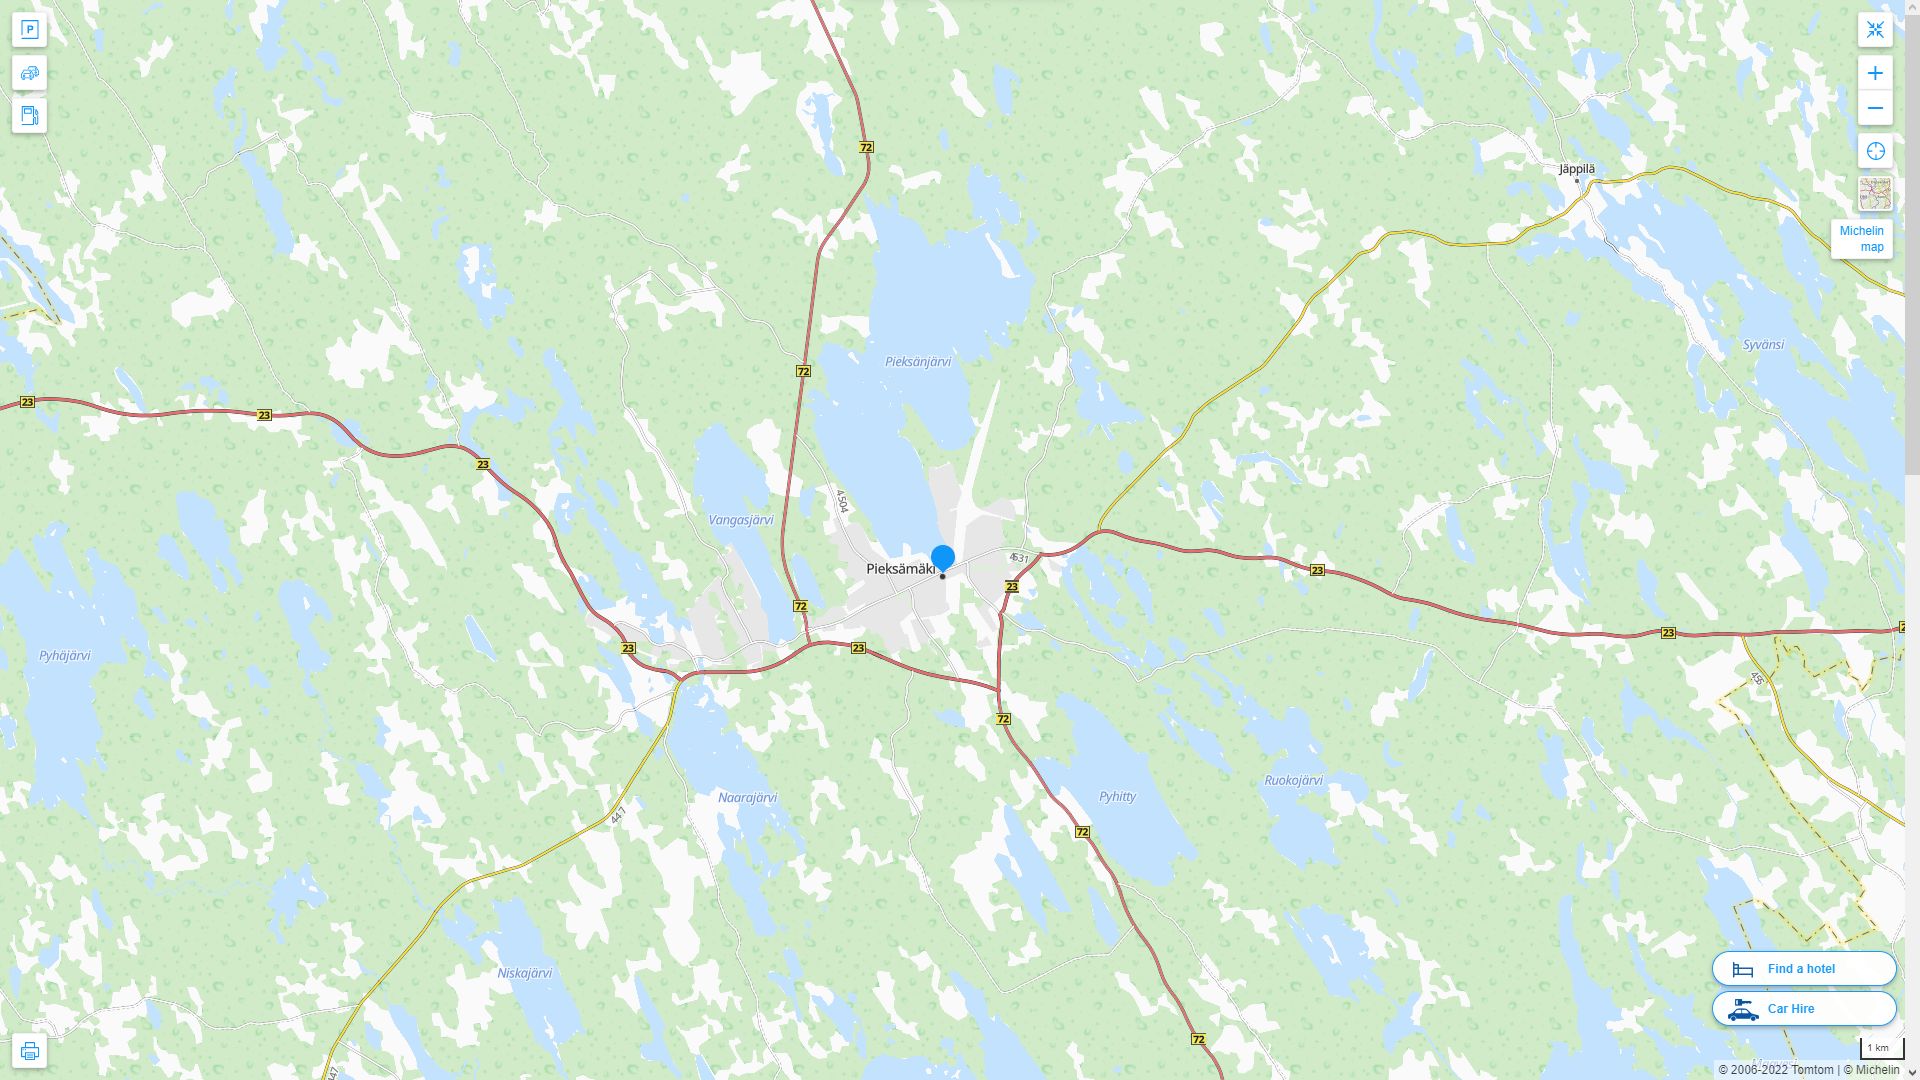 Pieksamaki Finlande Autoroute et carte routiere